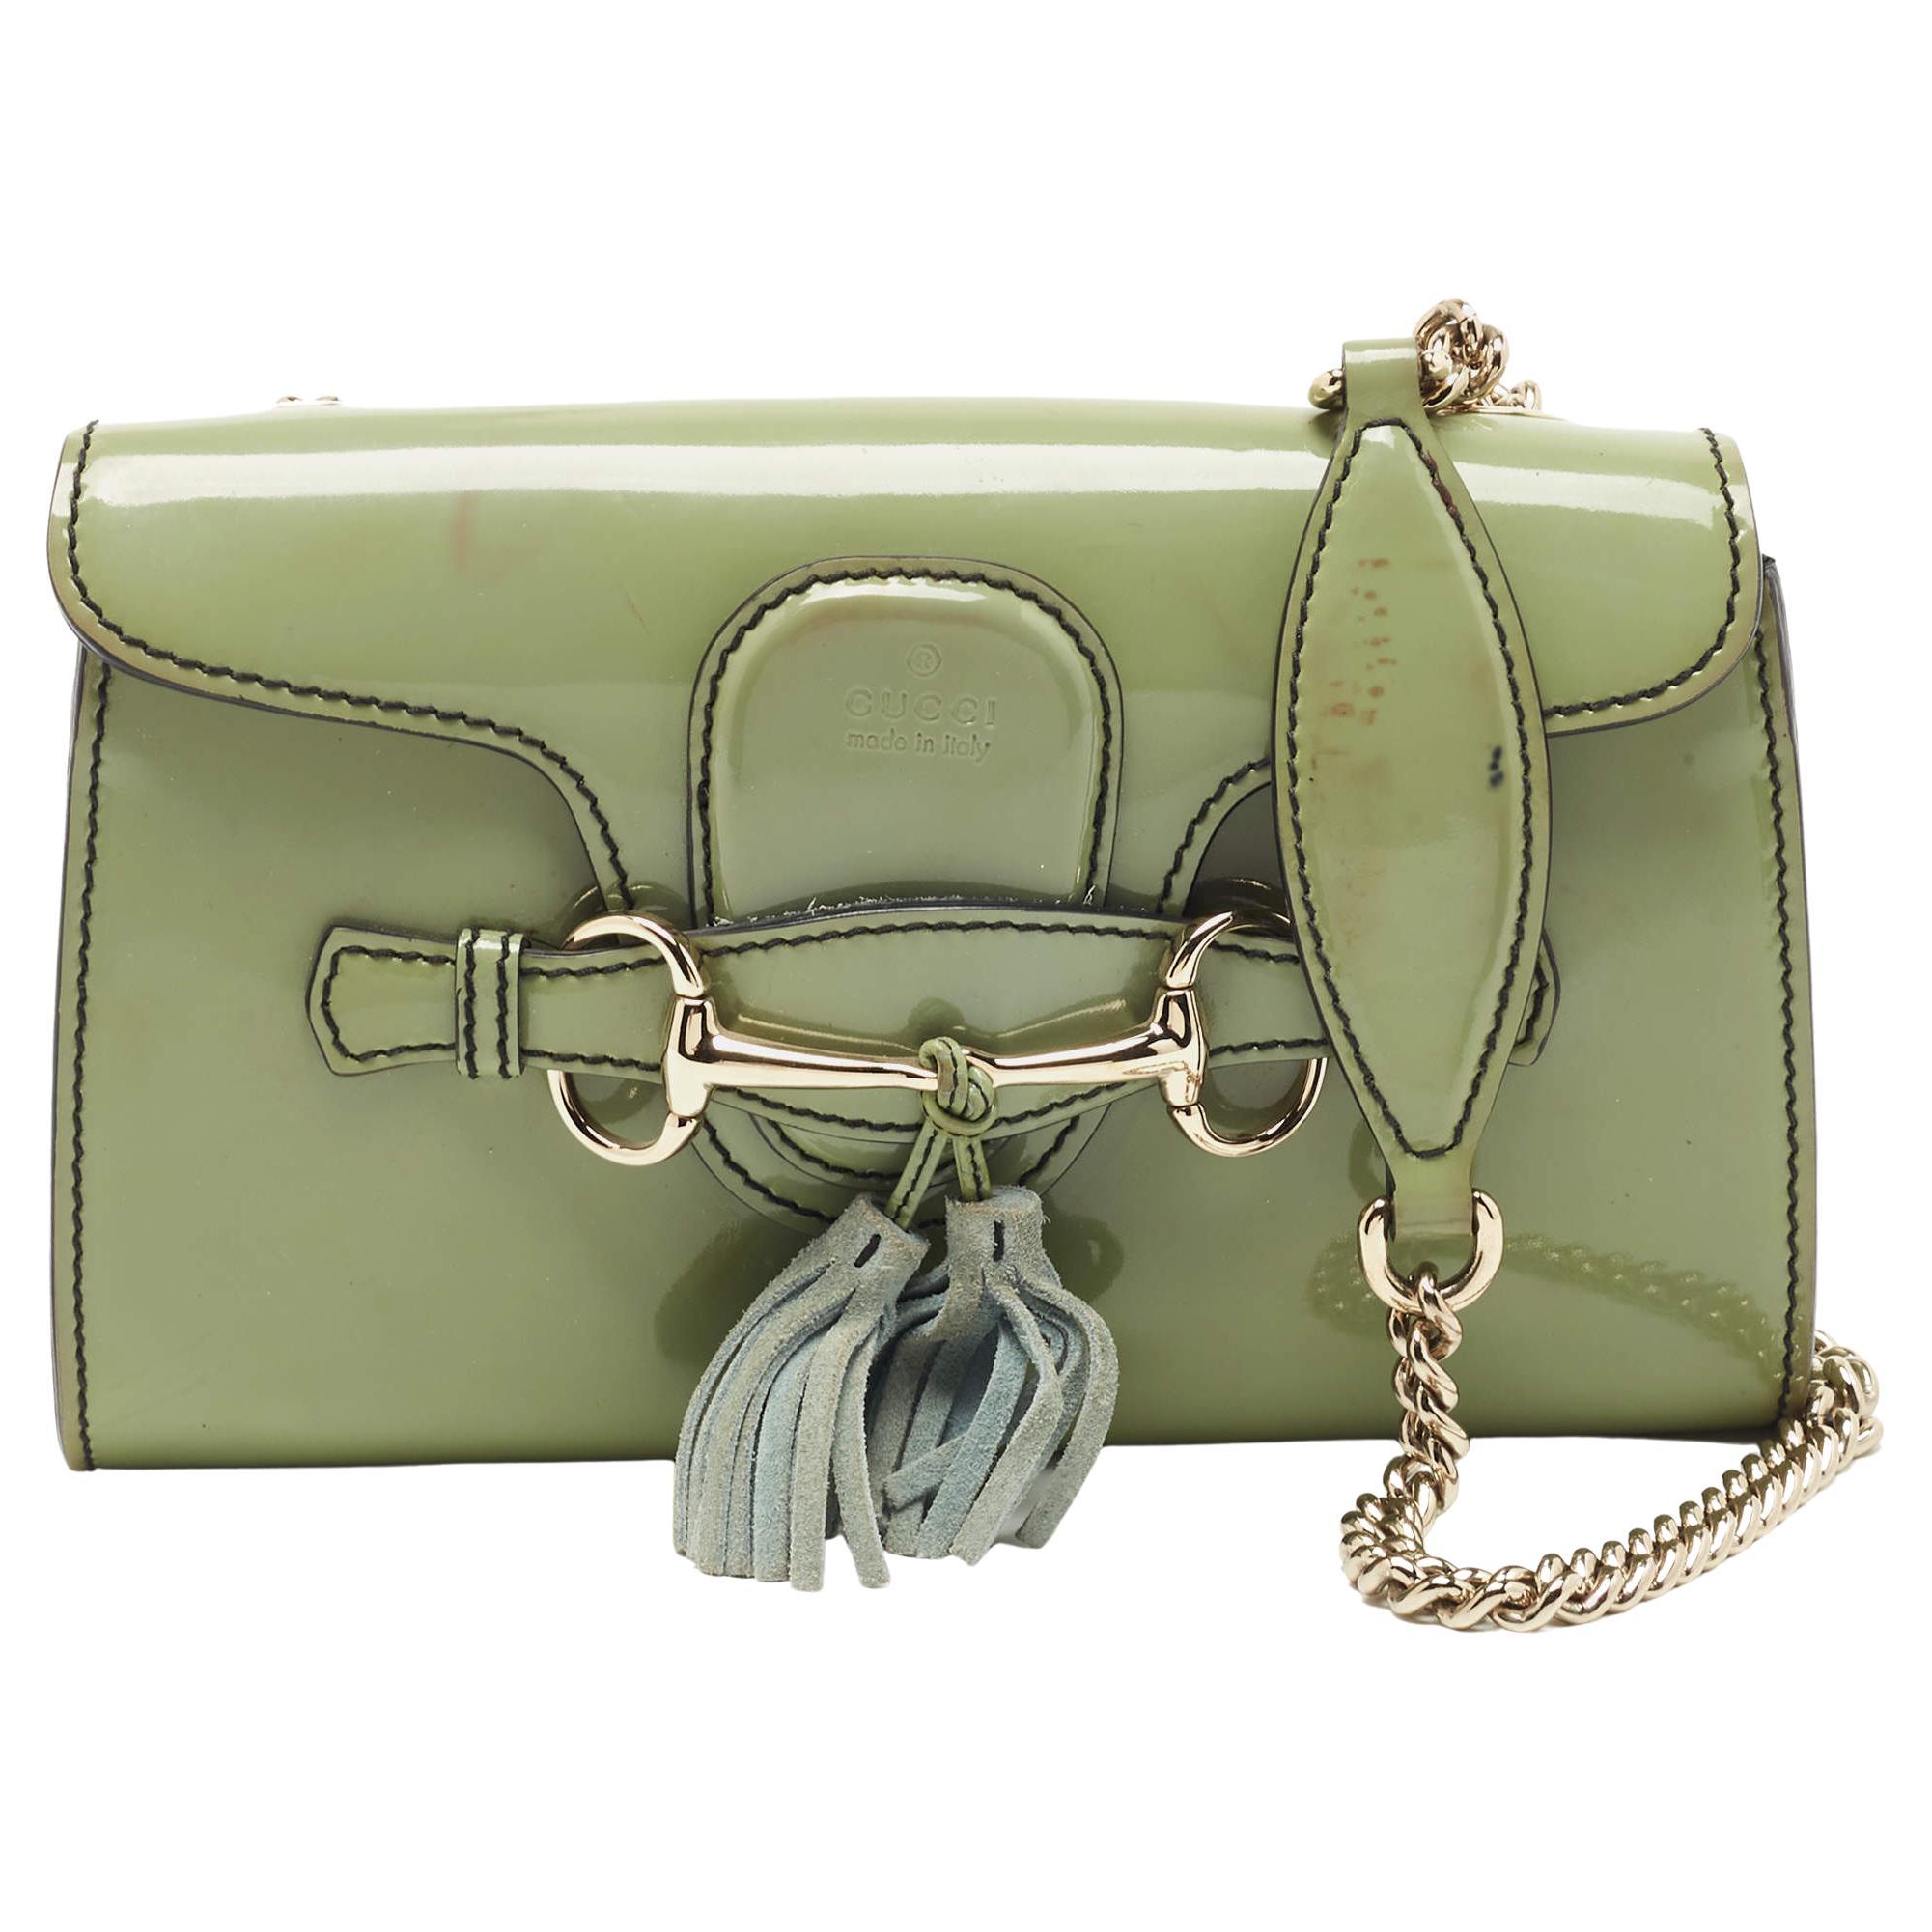 Gucci Light Green Patent Leather Emily Shoulder Bag